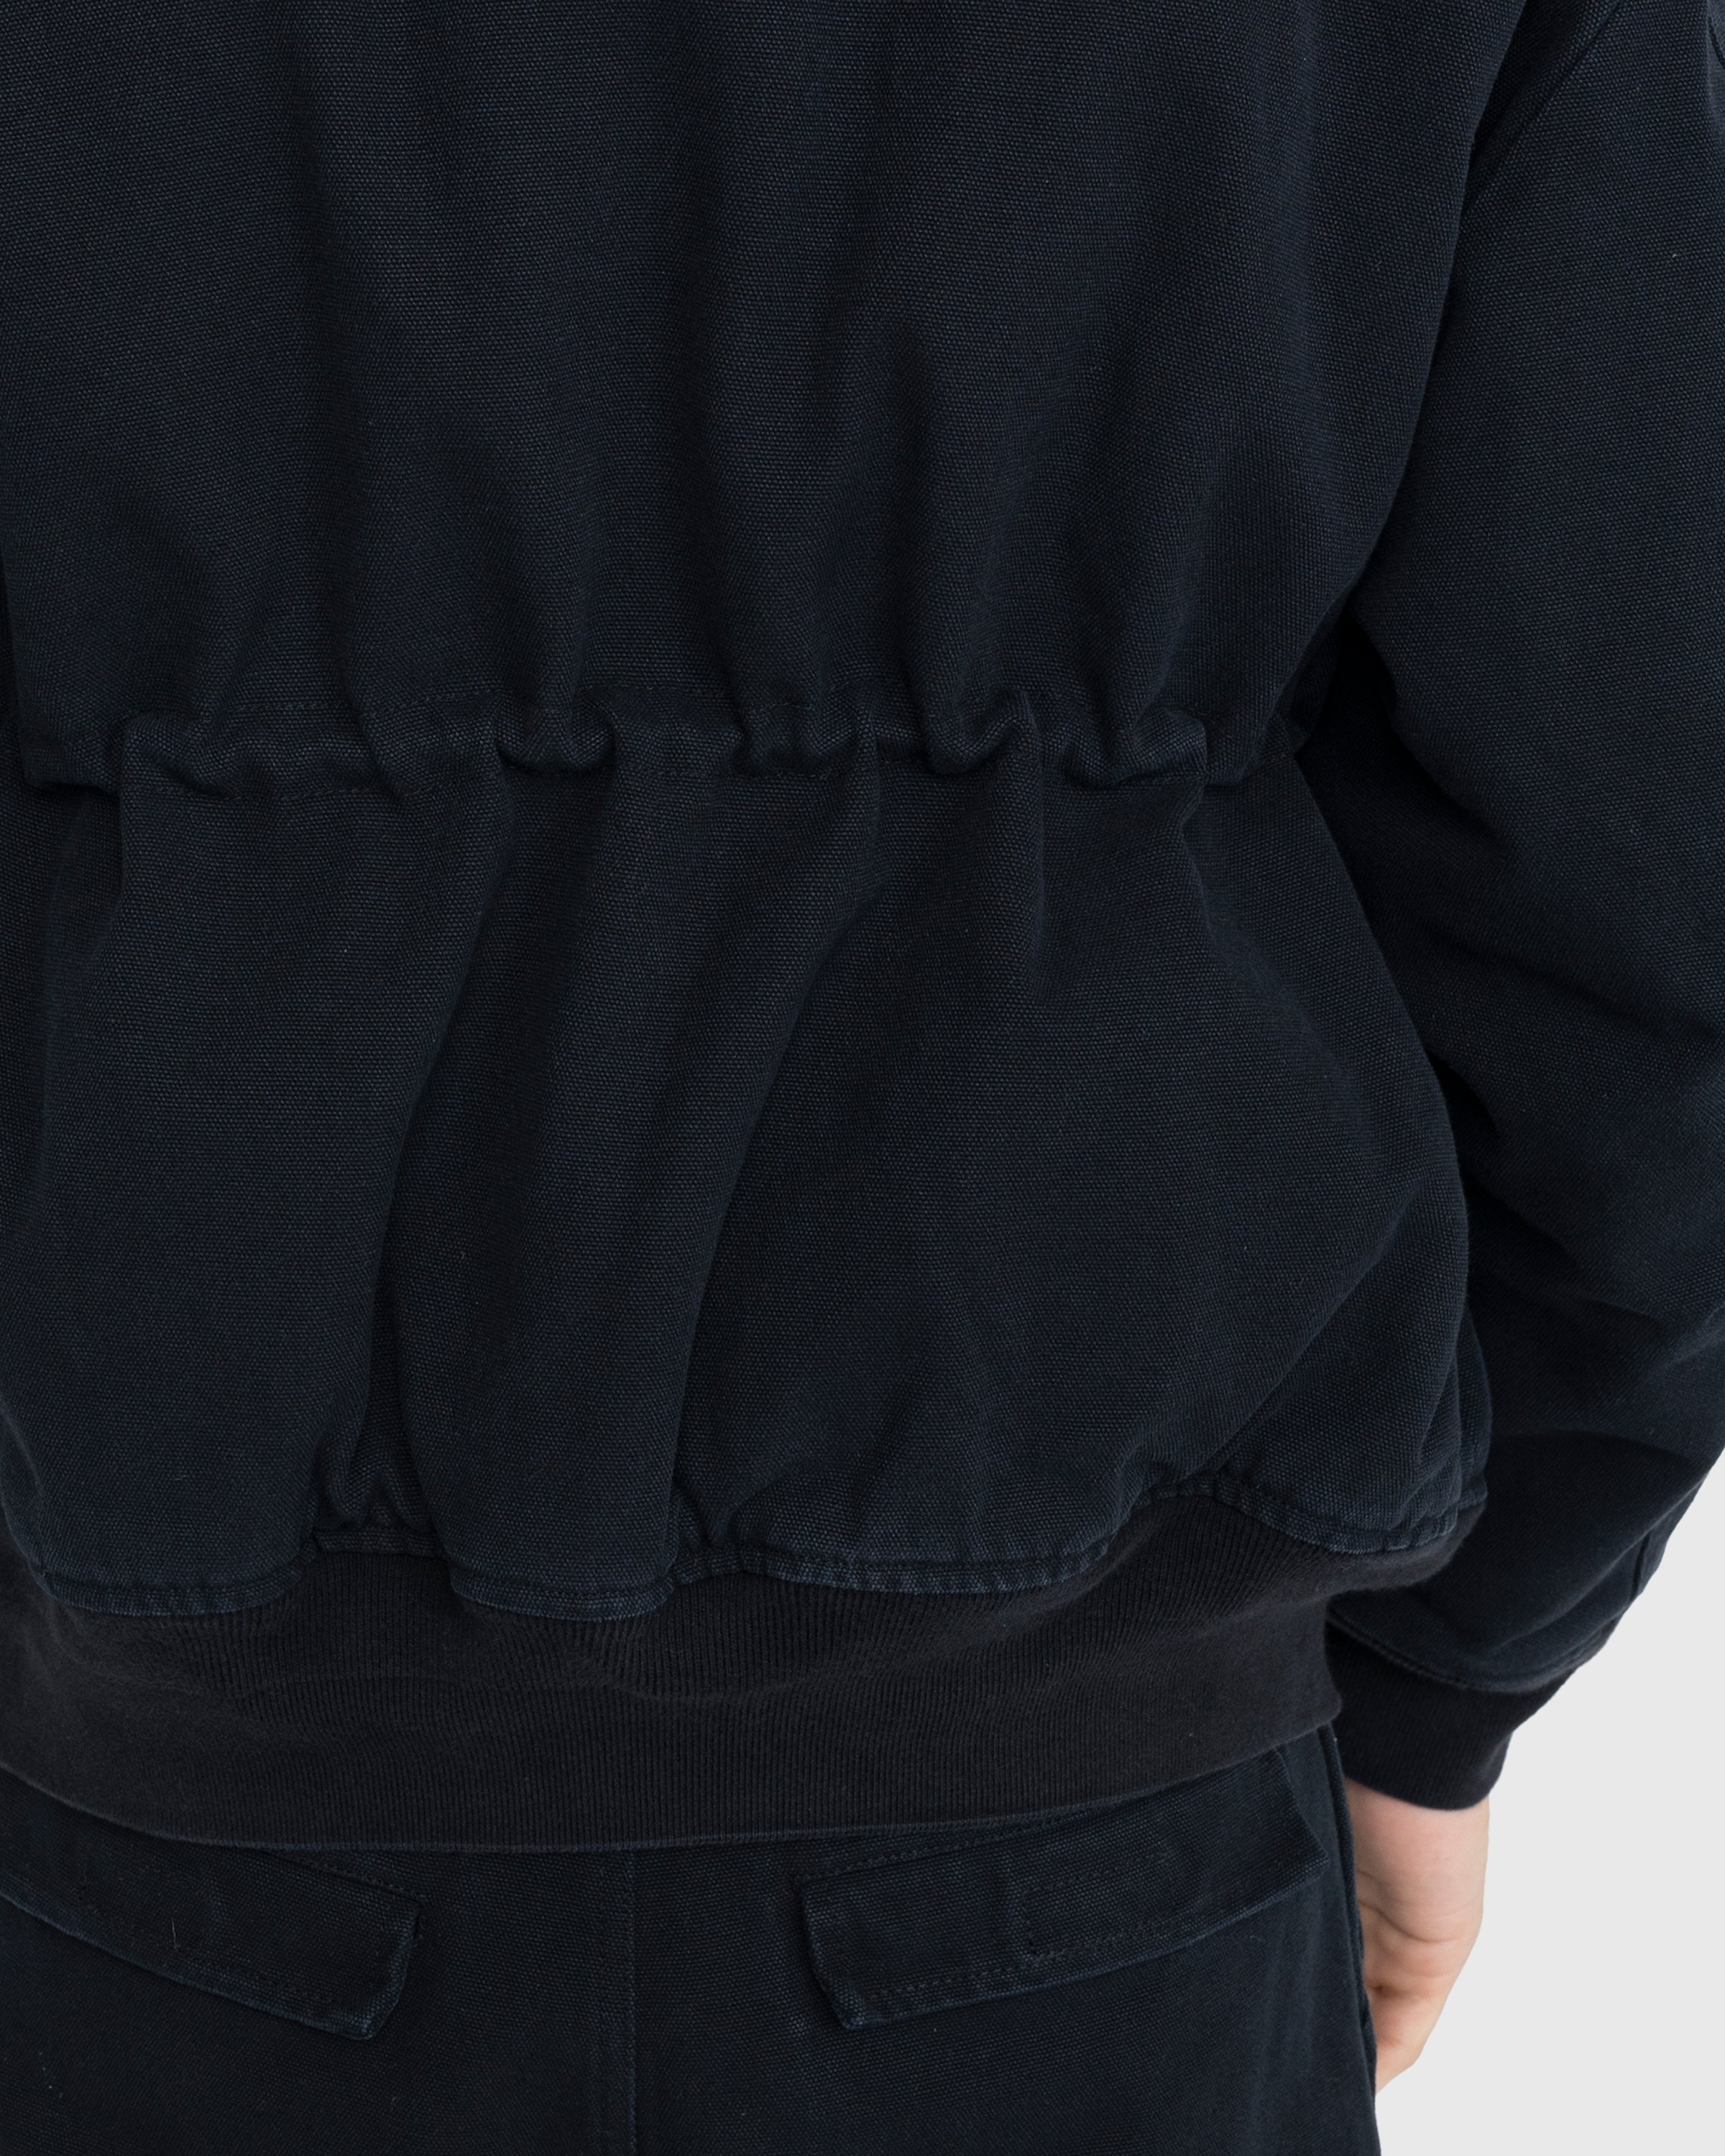 Acne Studios – Organic Cotton Bomber Jacket Black - Outerwear - Black - Image 6